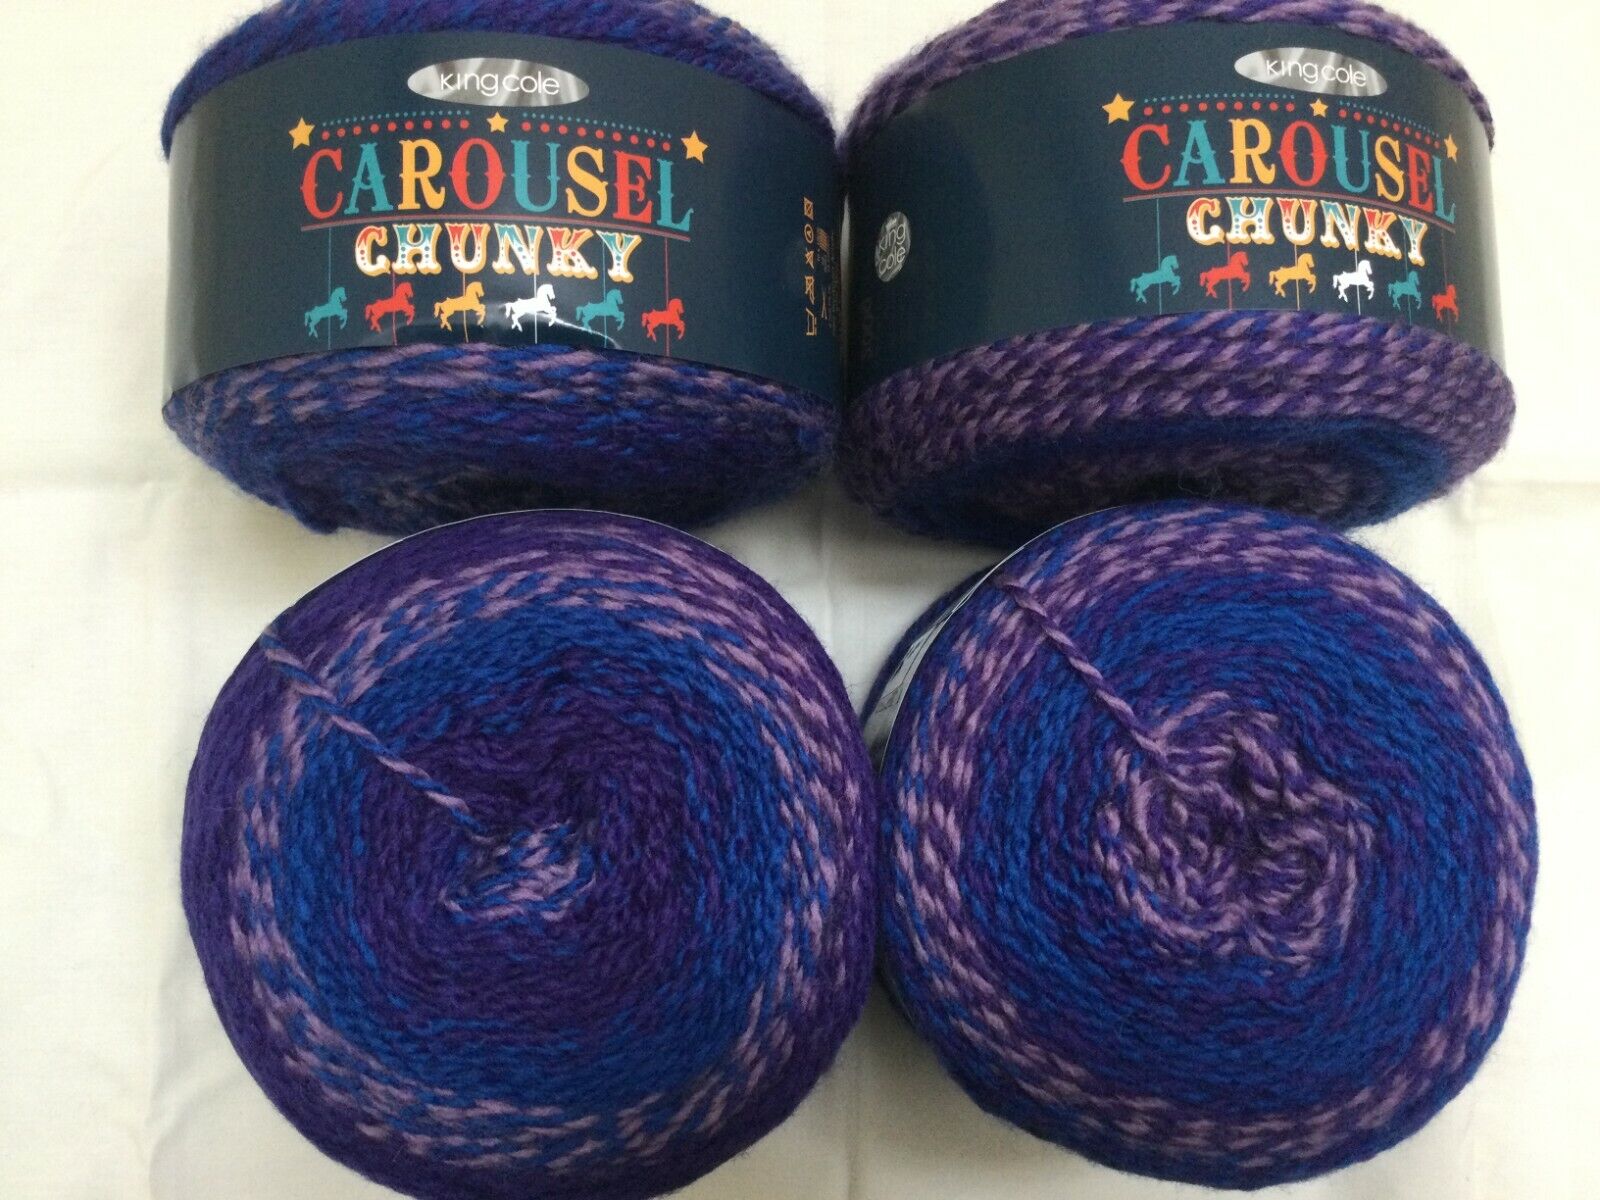 4 Balls Of King Cole Carousel Chunky Yarn With30% Wool Shade Hel